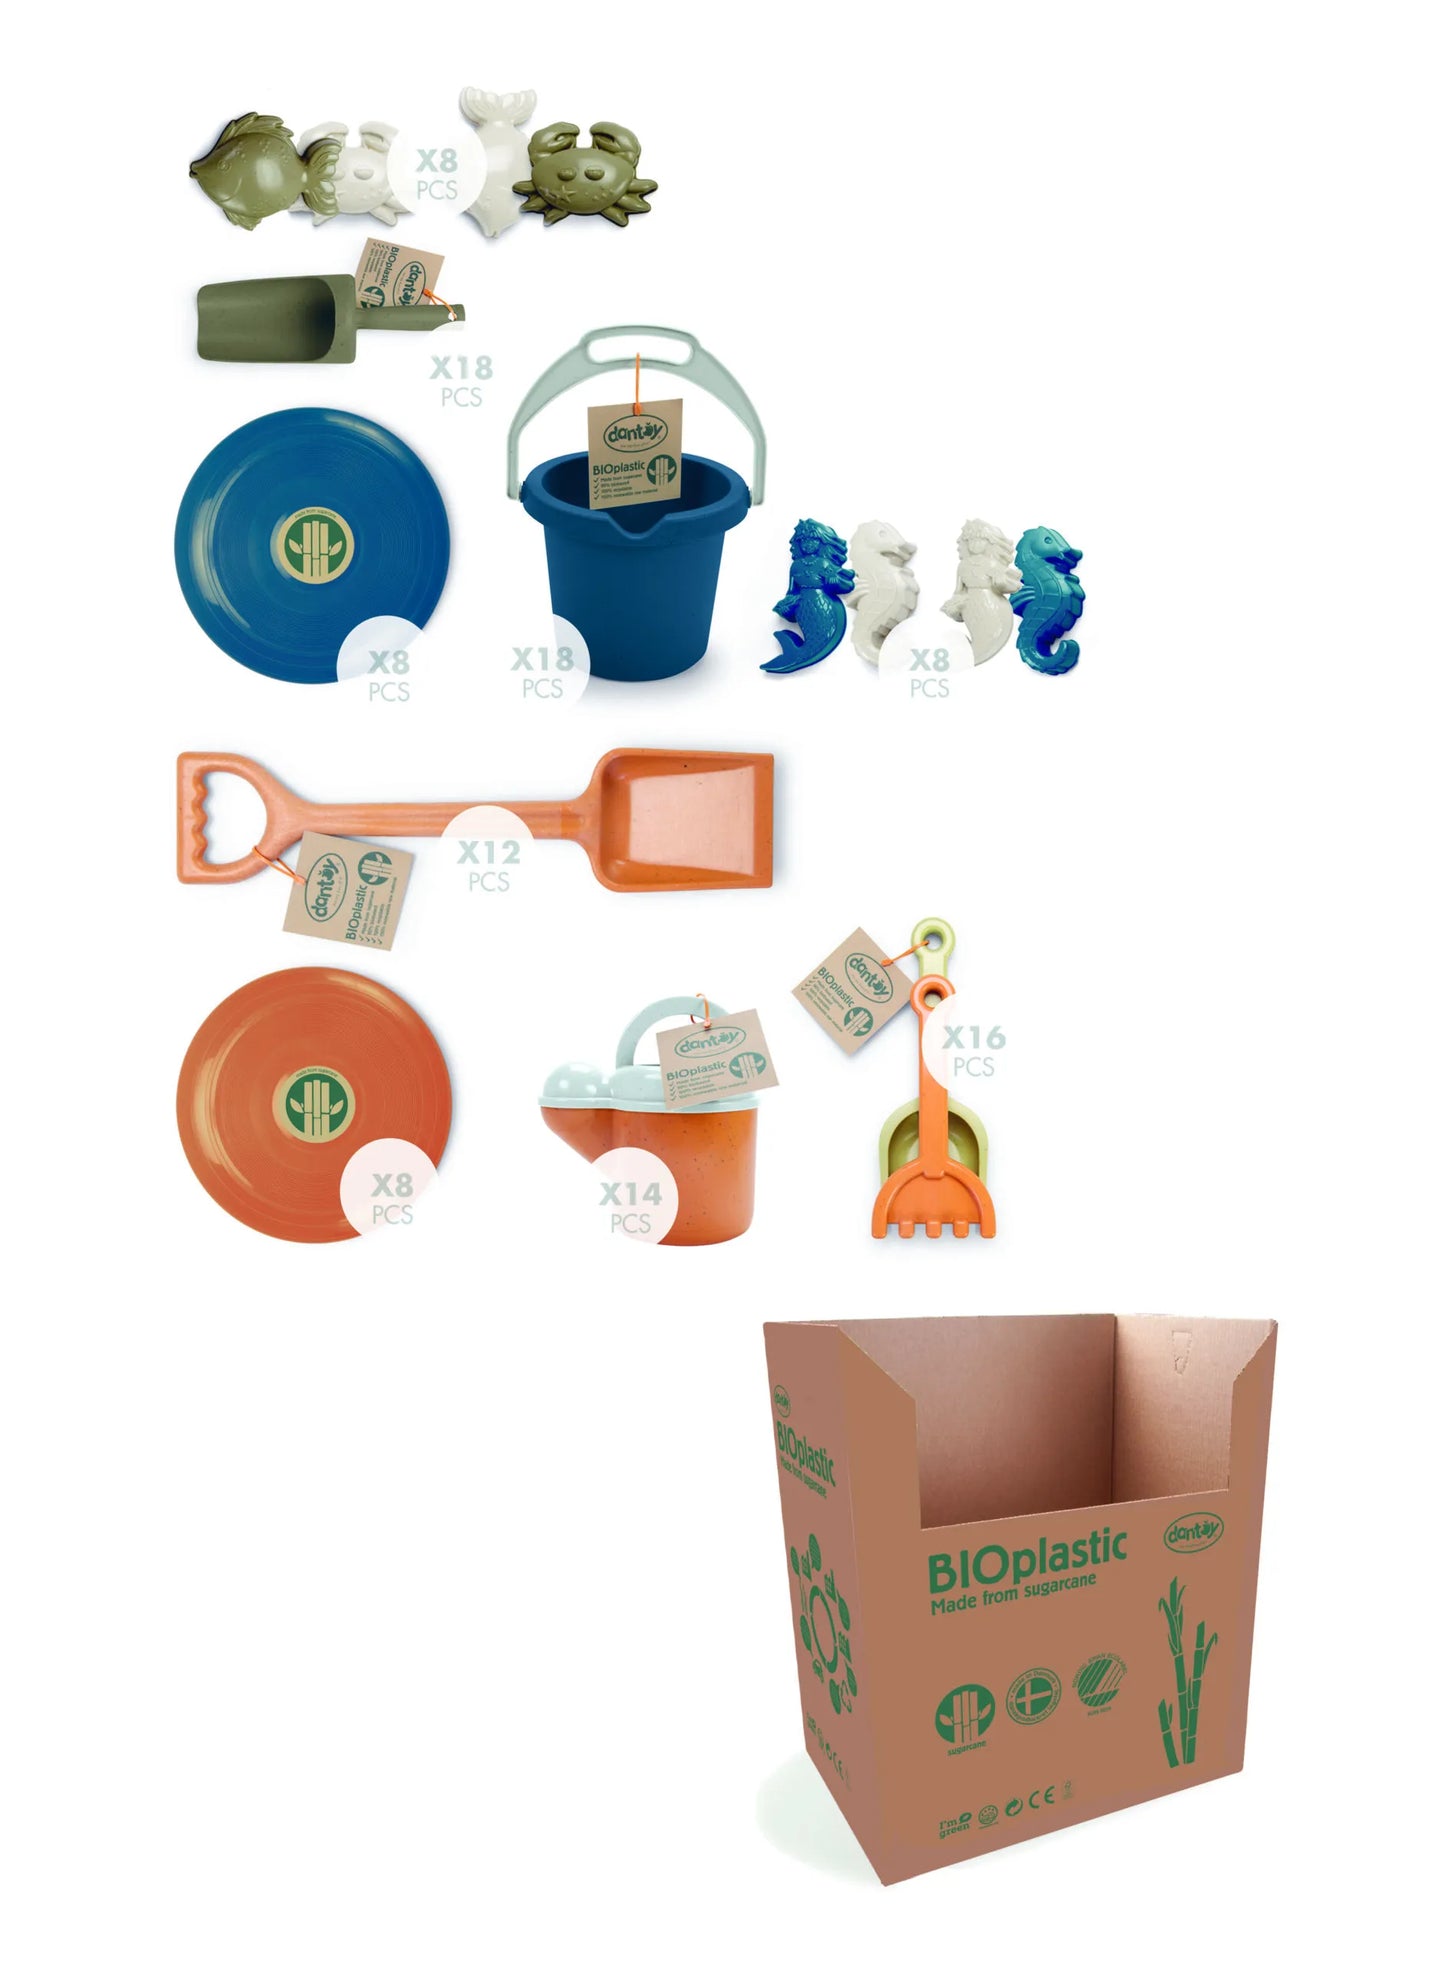 strandspeelgoed bioplastic per stuk - jouets de plage bioplastic par pièce